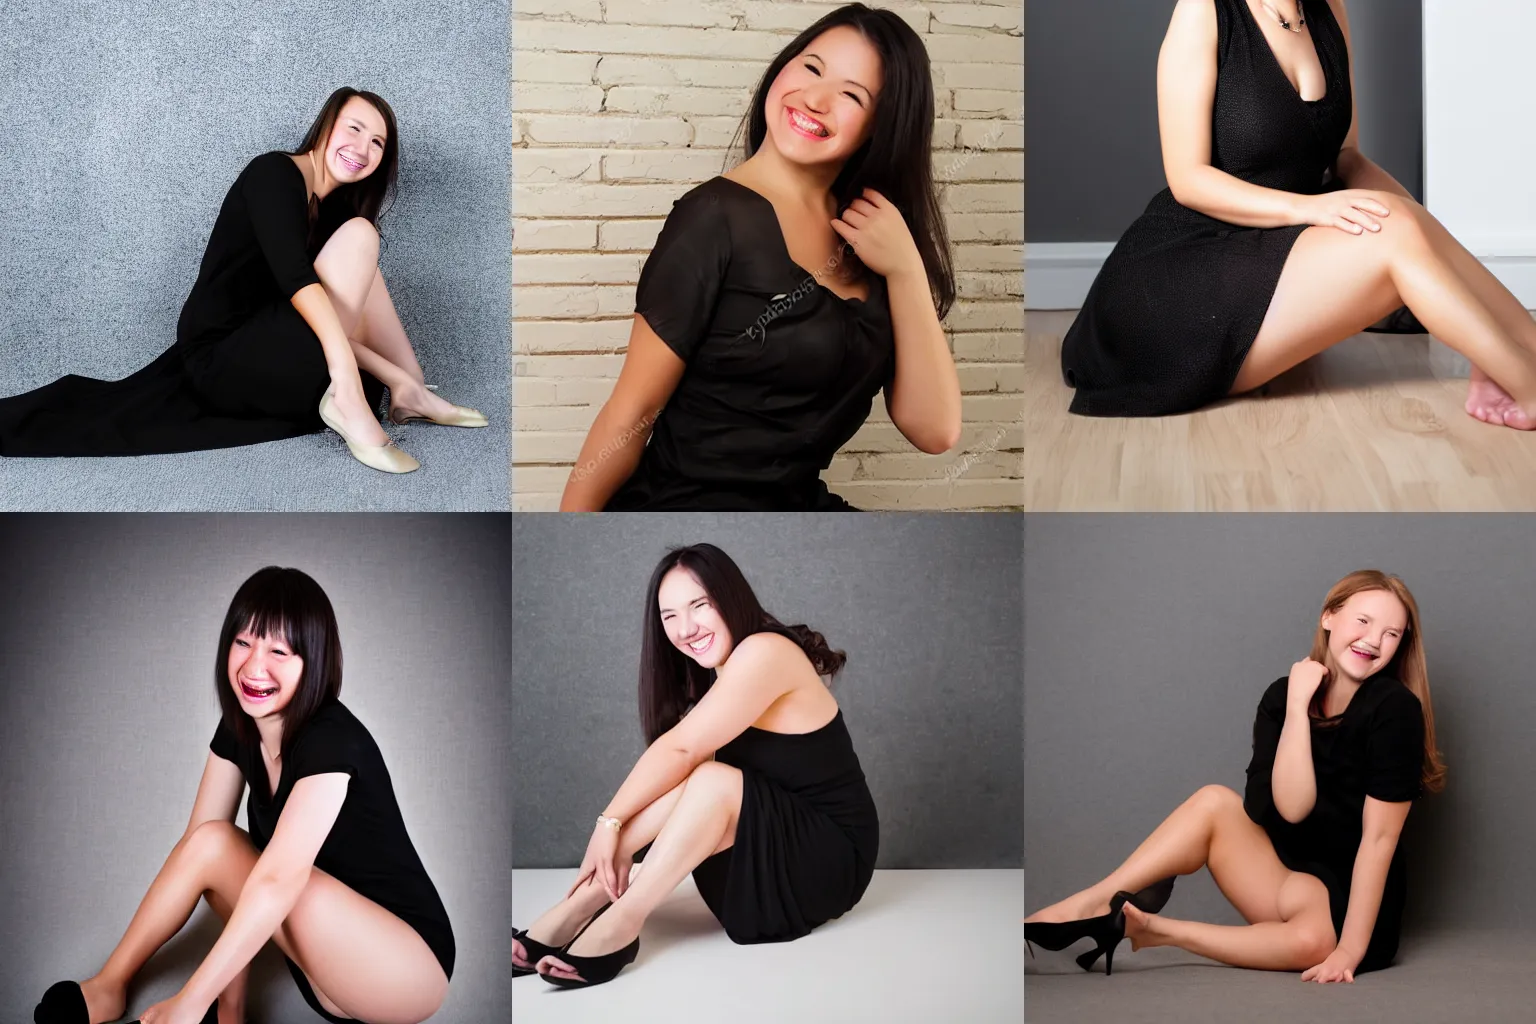 Prompt: shy girl 24yo black dress happy smile sitting on the floor studio lightening